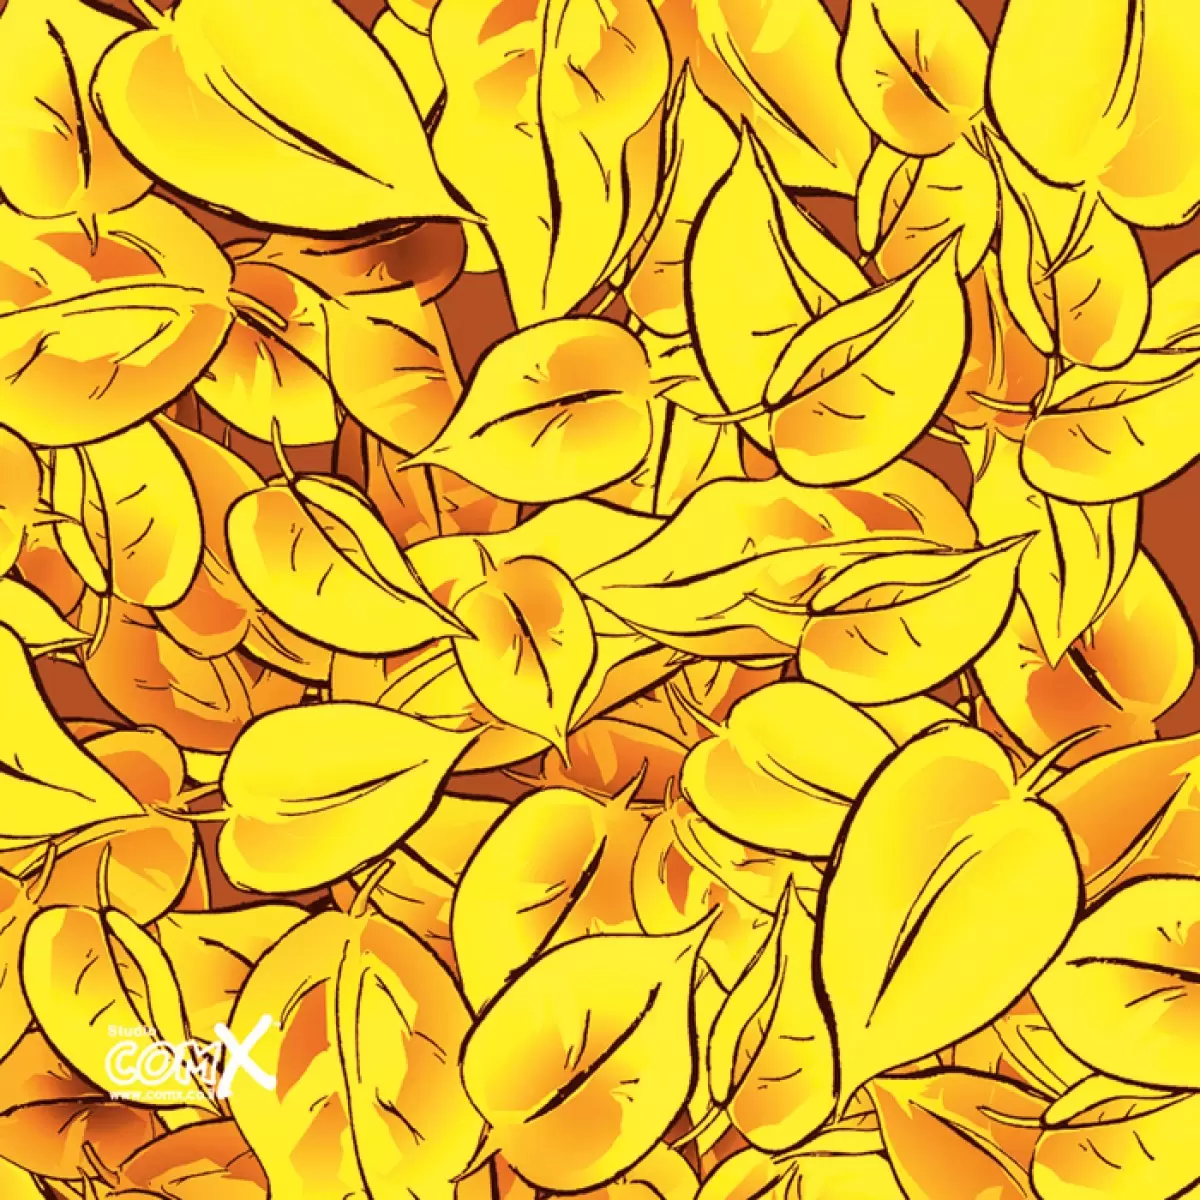  Yellow Leave 2 - חנן אביסף - תמונות לפינת אוכל כפרית תבניות של פרחים וצמחים  - מק''ט: 52118